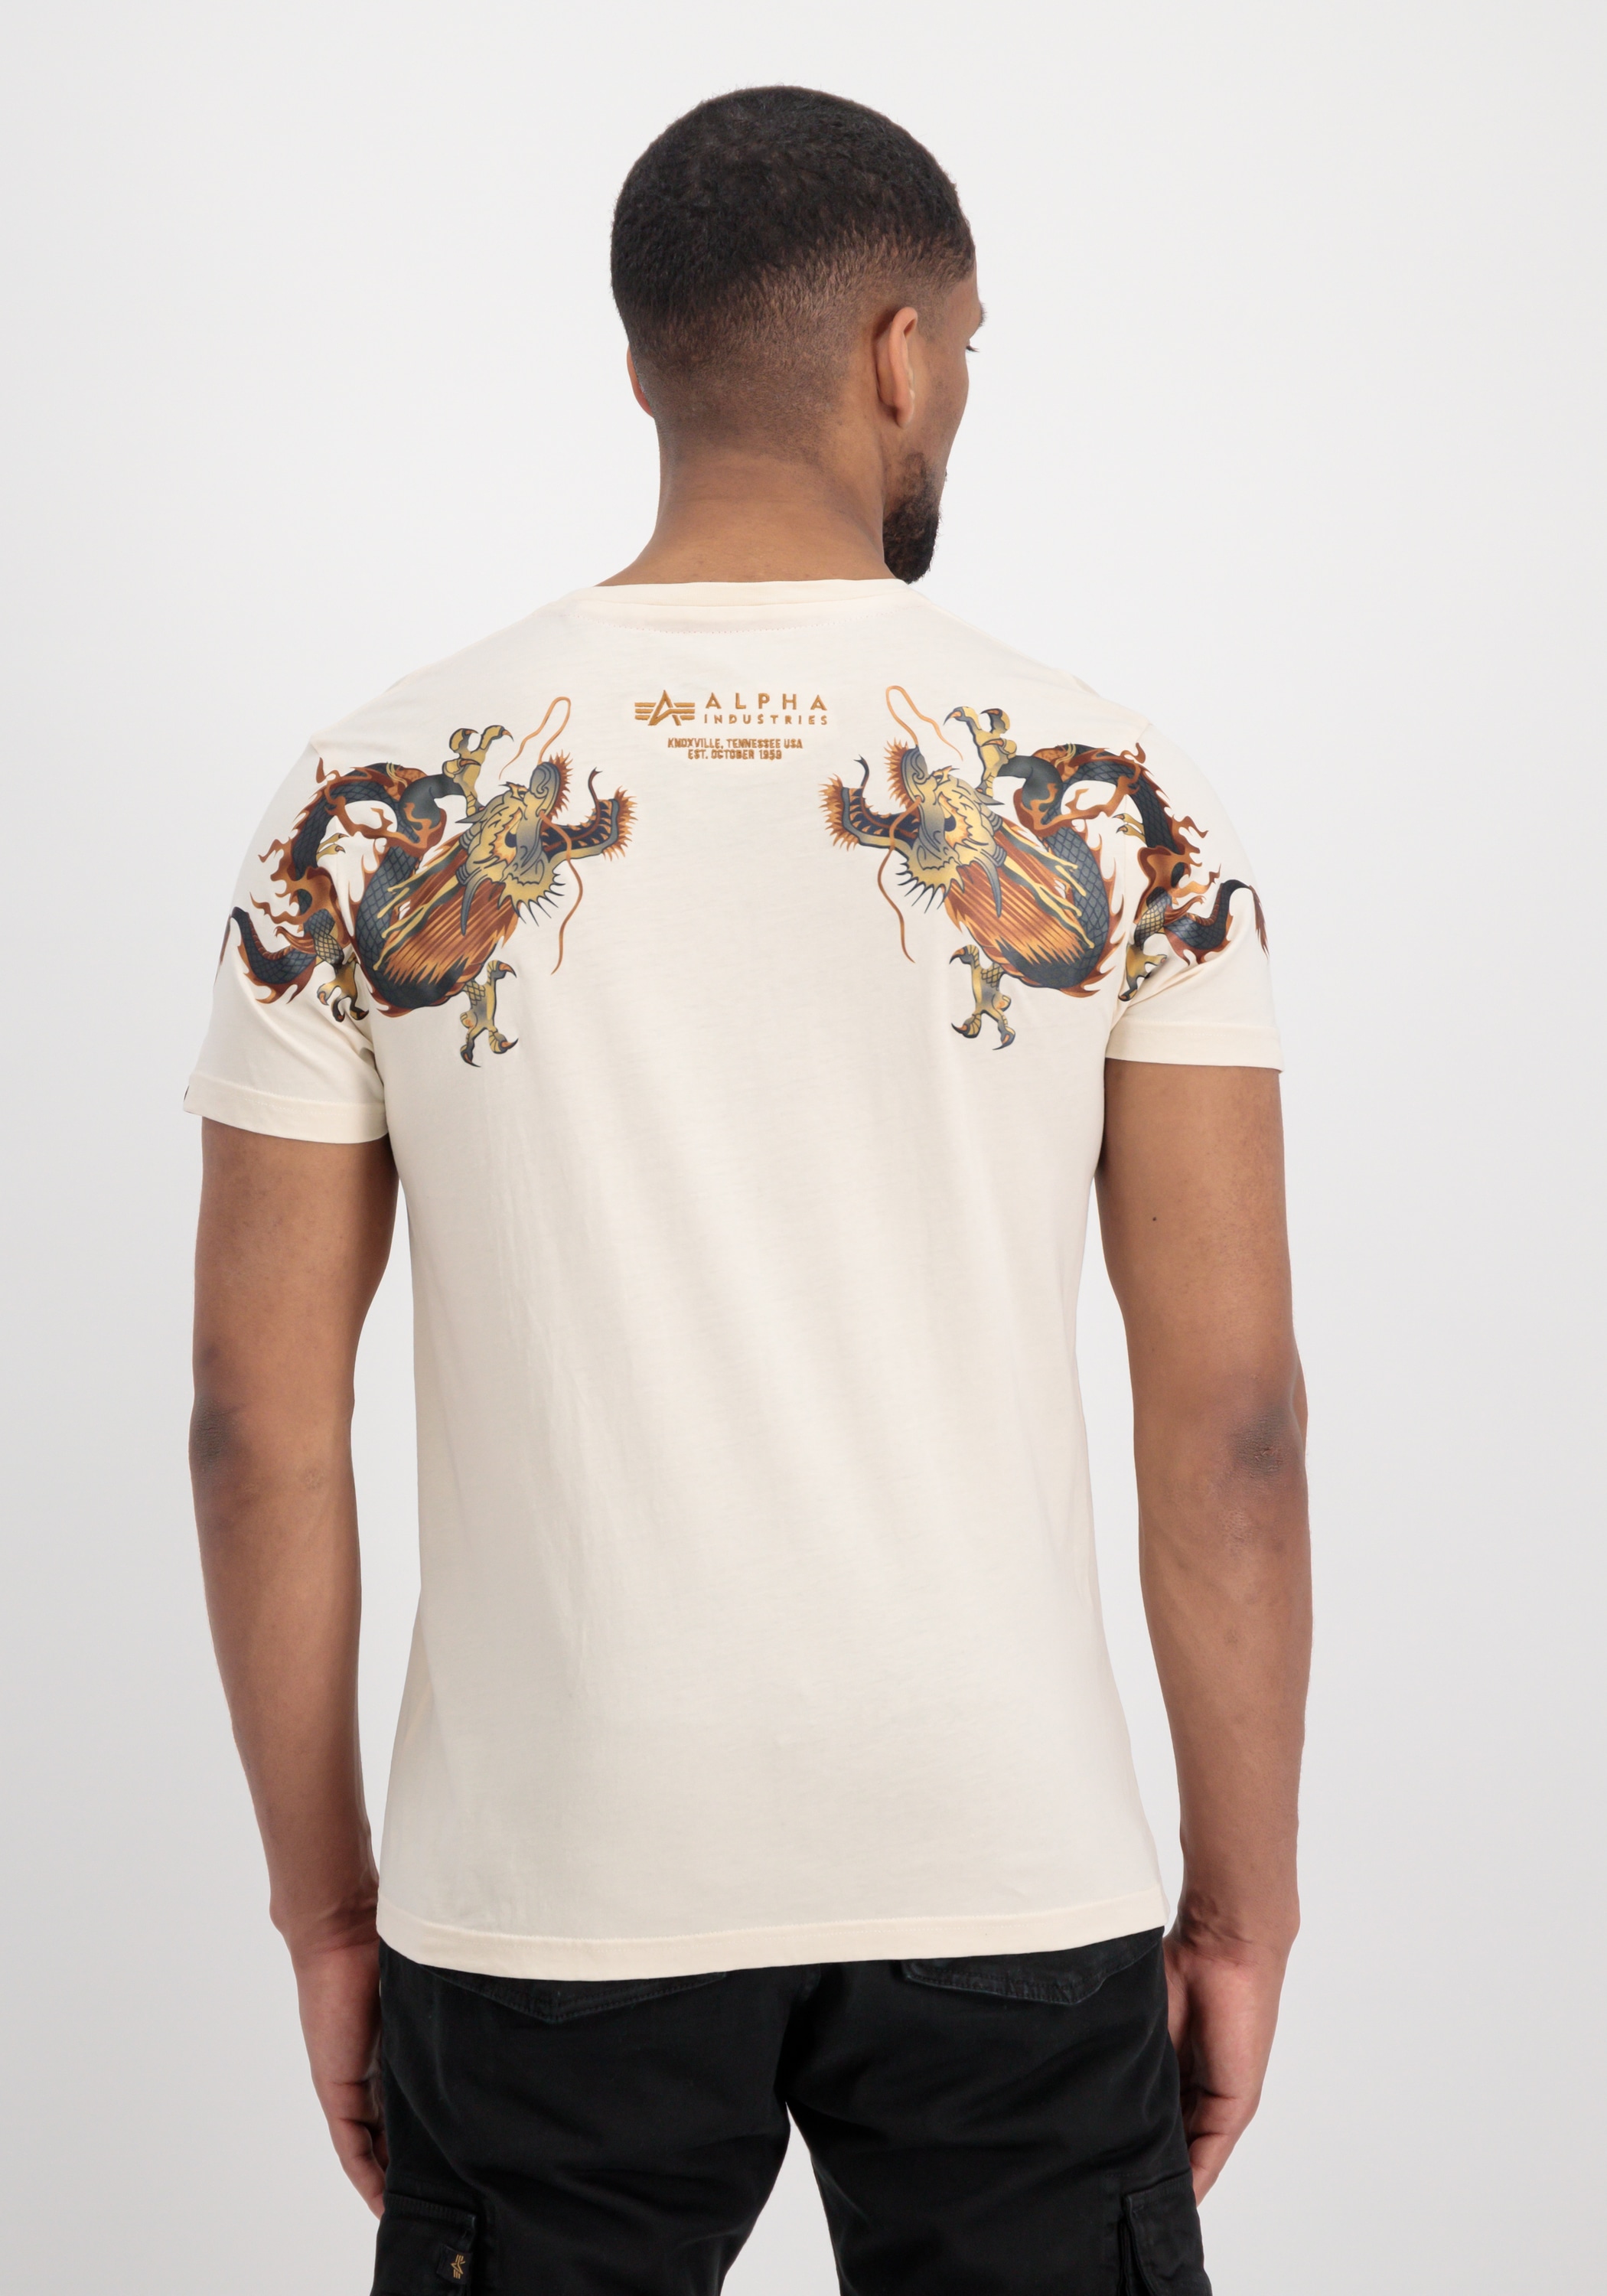 T-Shirts Alpha - T-Shirt kaufen T« BAUR ▷ | Dragon »Alpha Men Industries EMB Industries